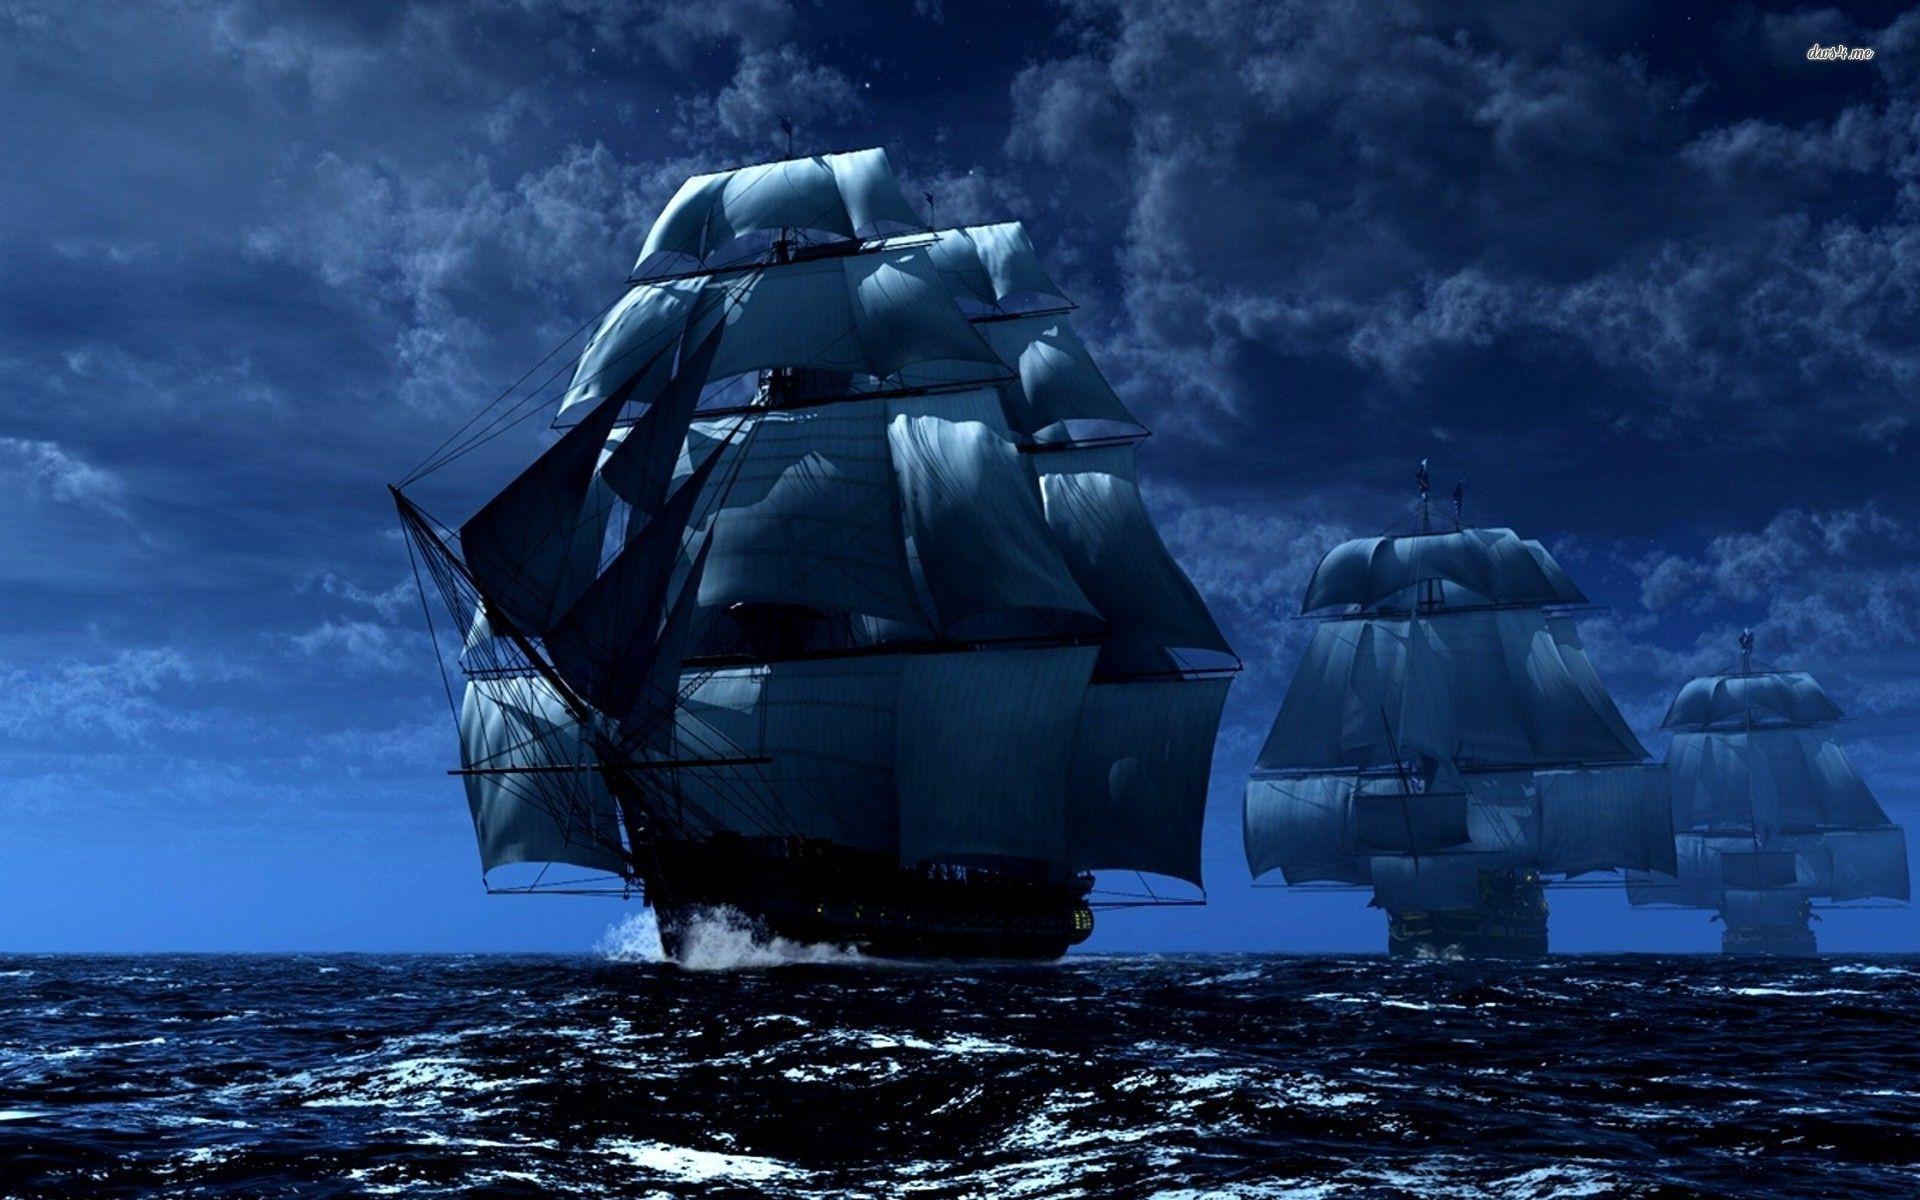 Pirate Ship Night Suche. I.b.k. Picture